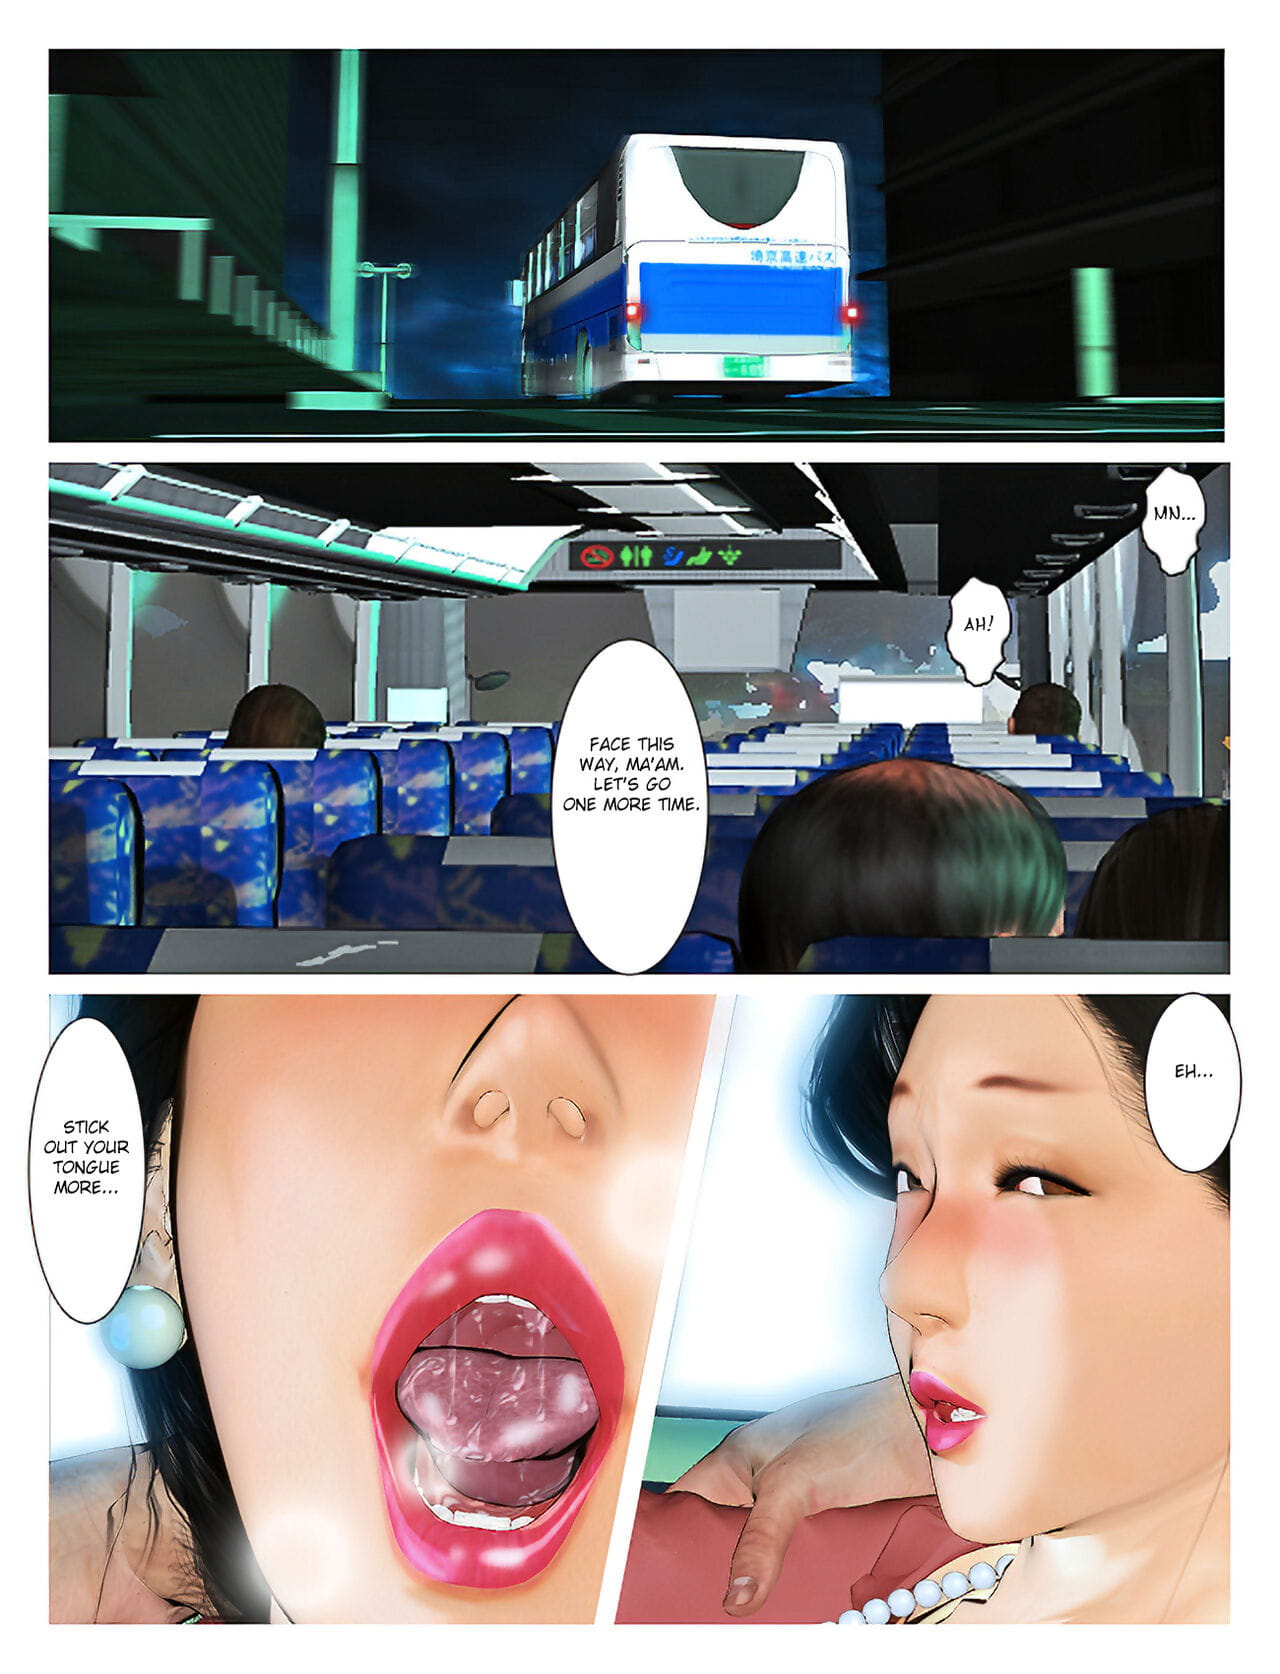 Kyou no Misako-san 2019:2 - part 2 page 1